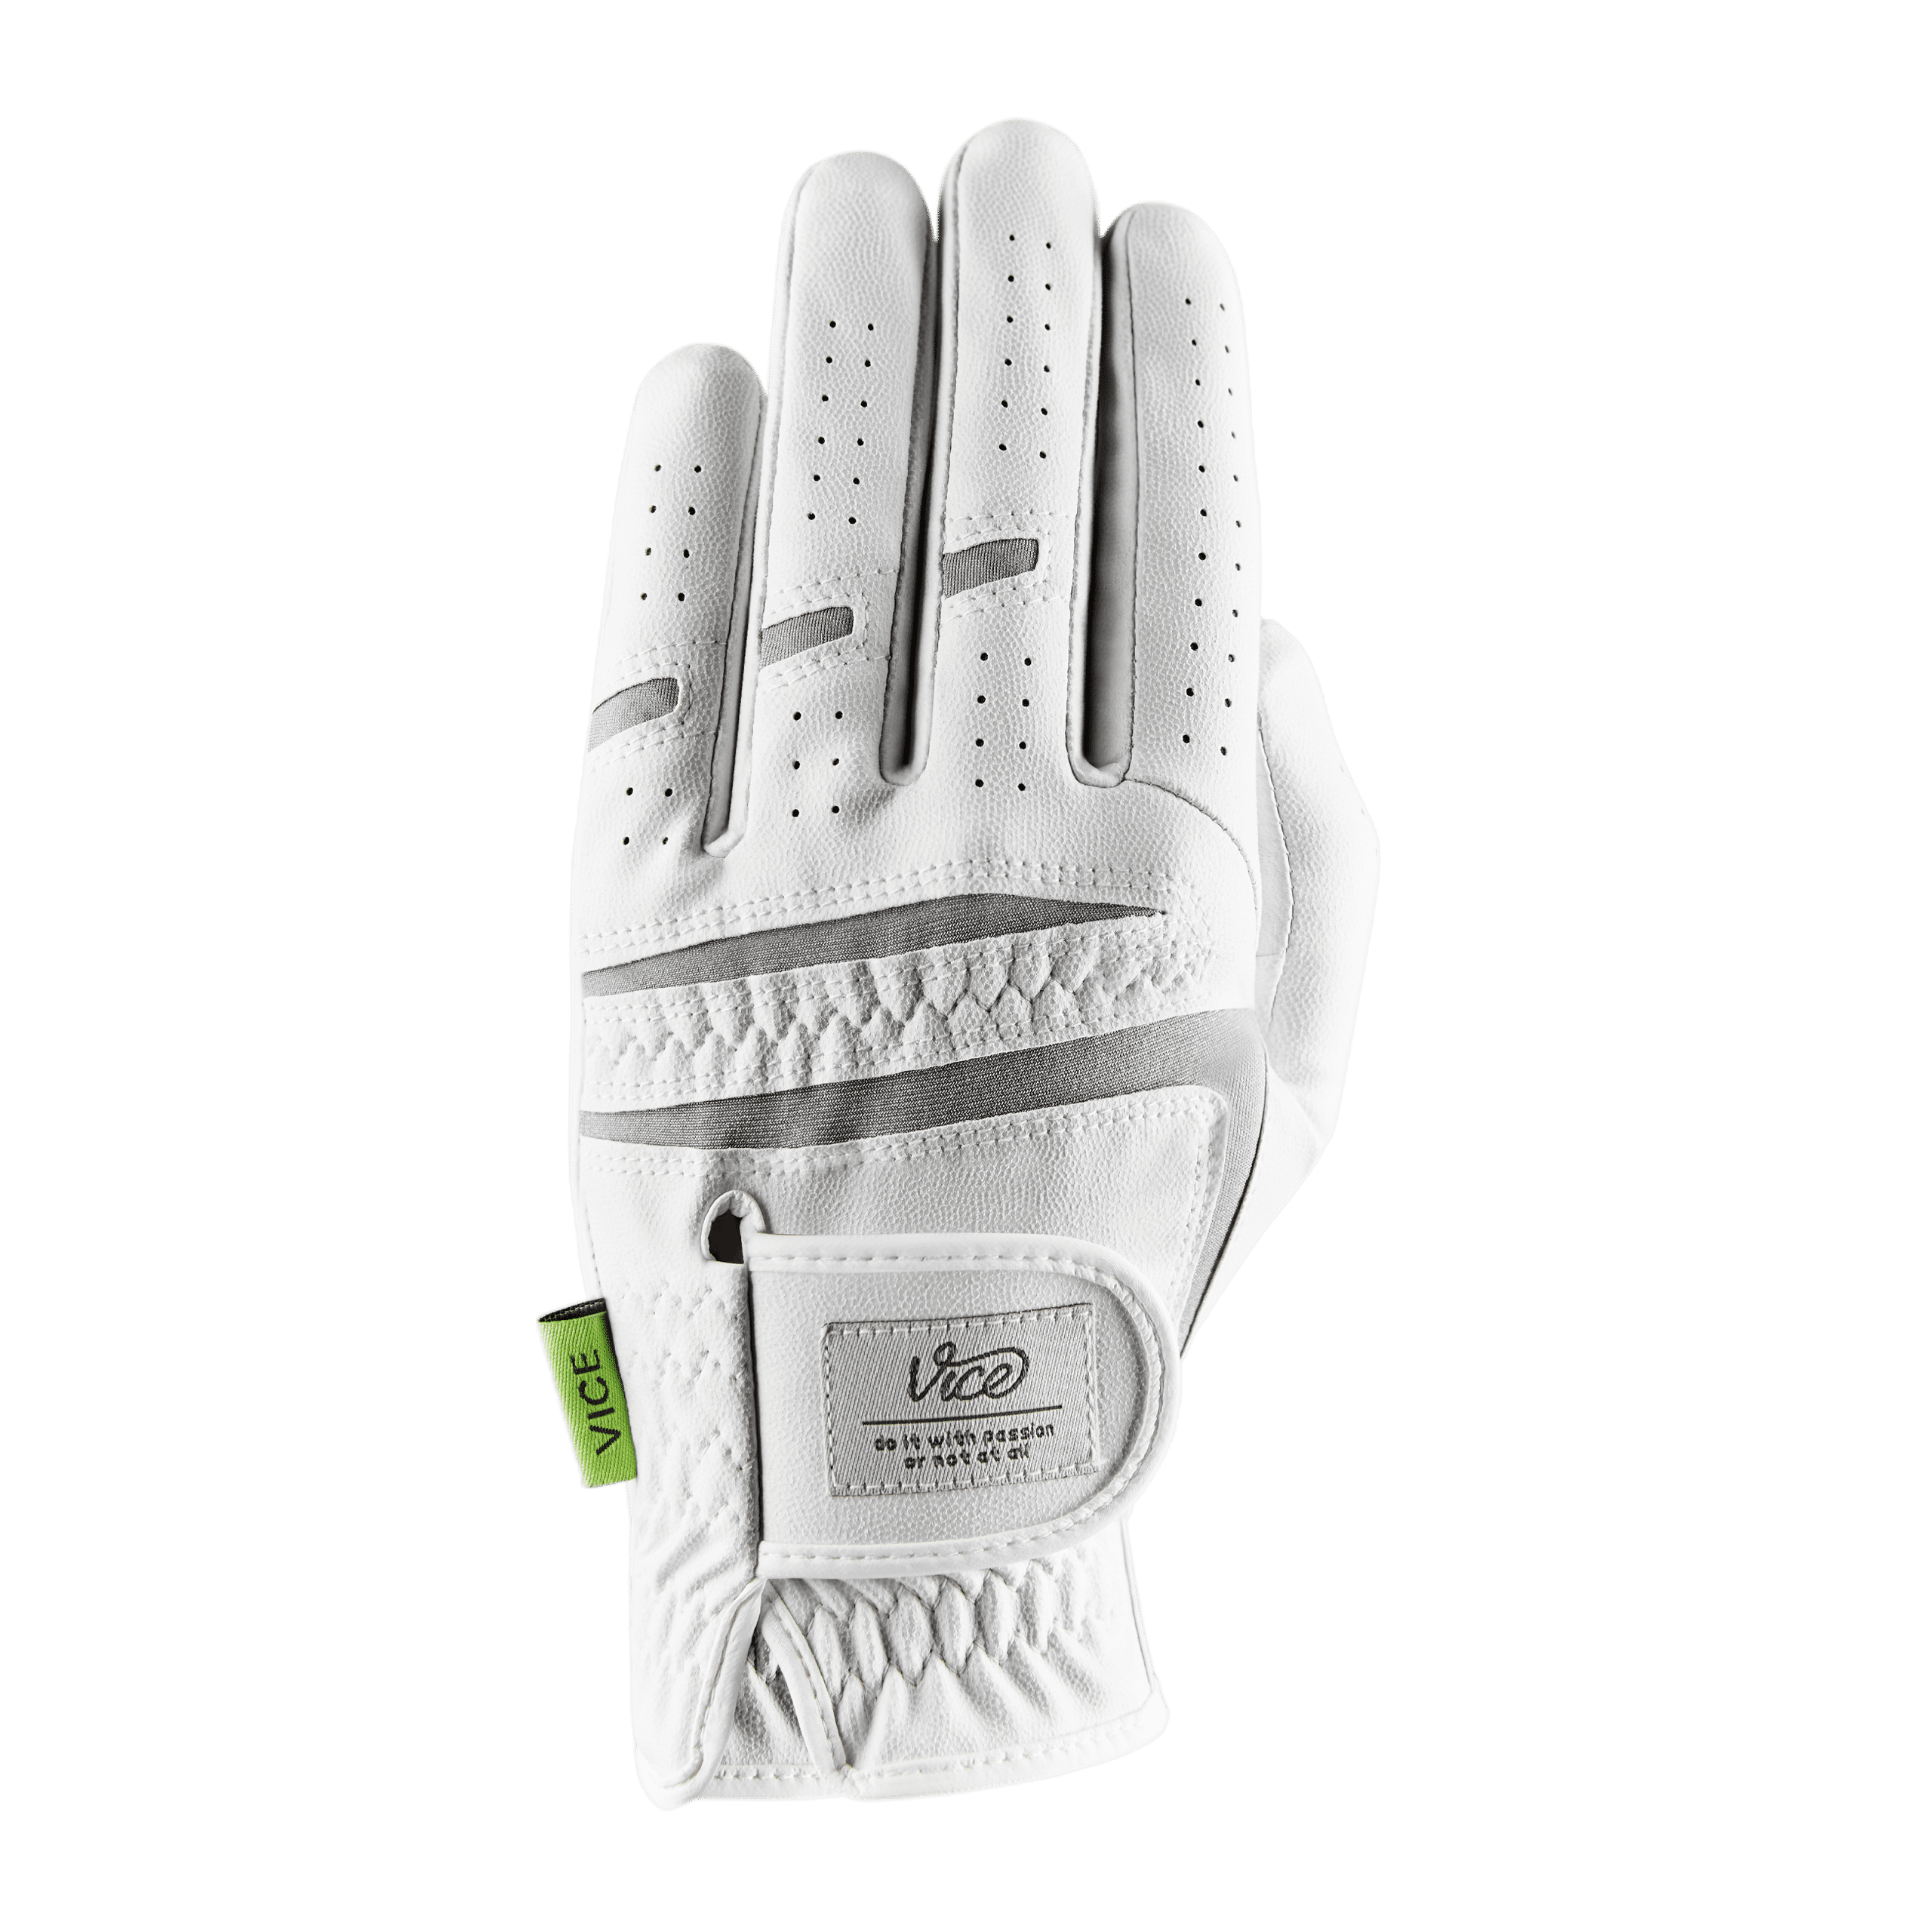 Vice Golf White Duro Golf Glove Left Hand - medium large - Walmart.com